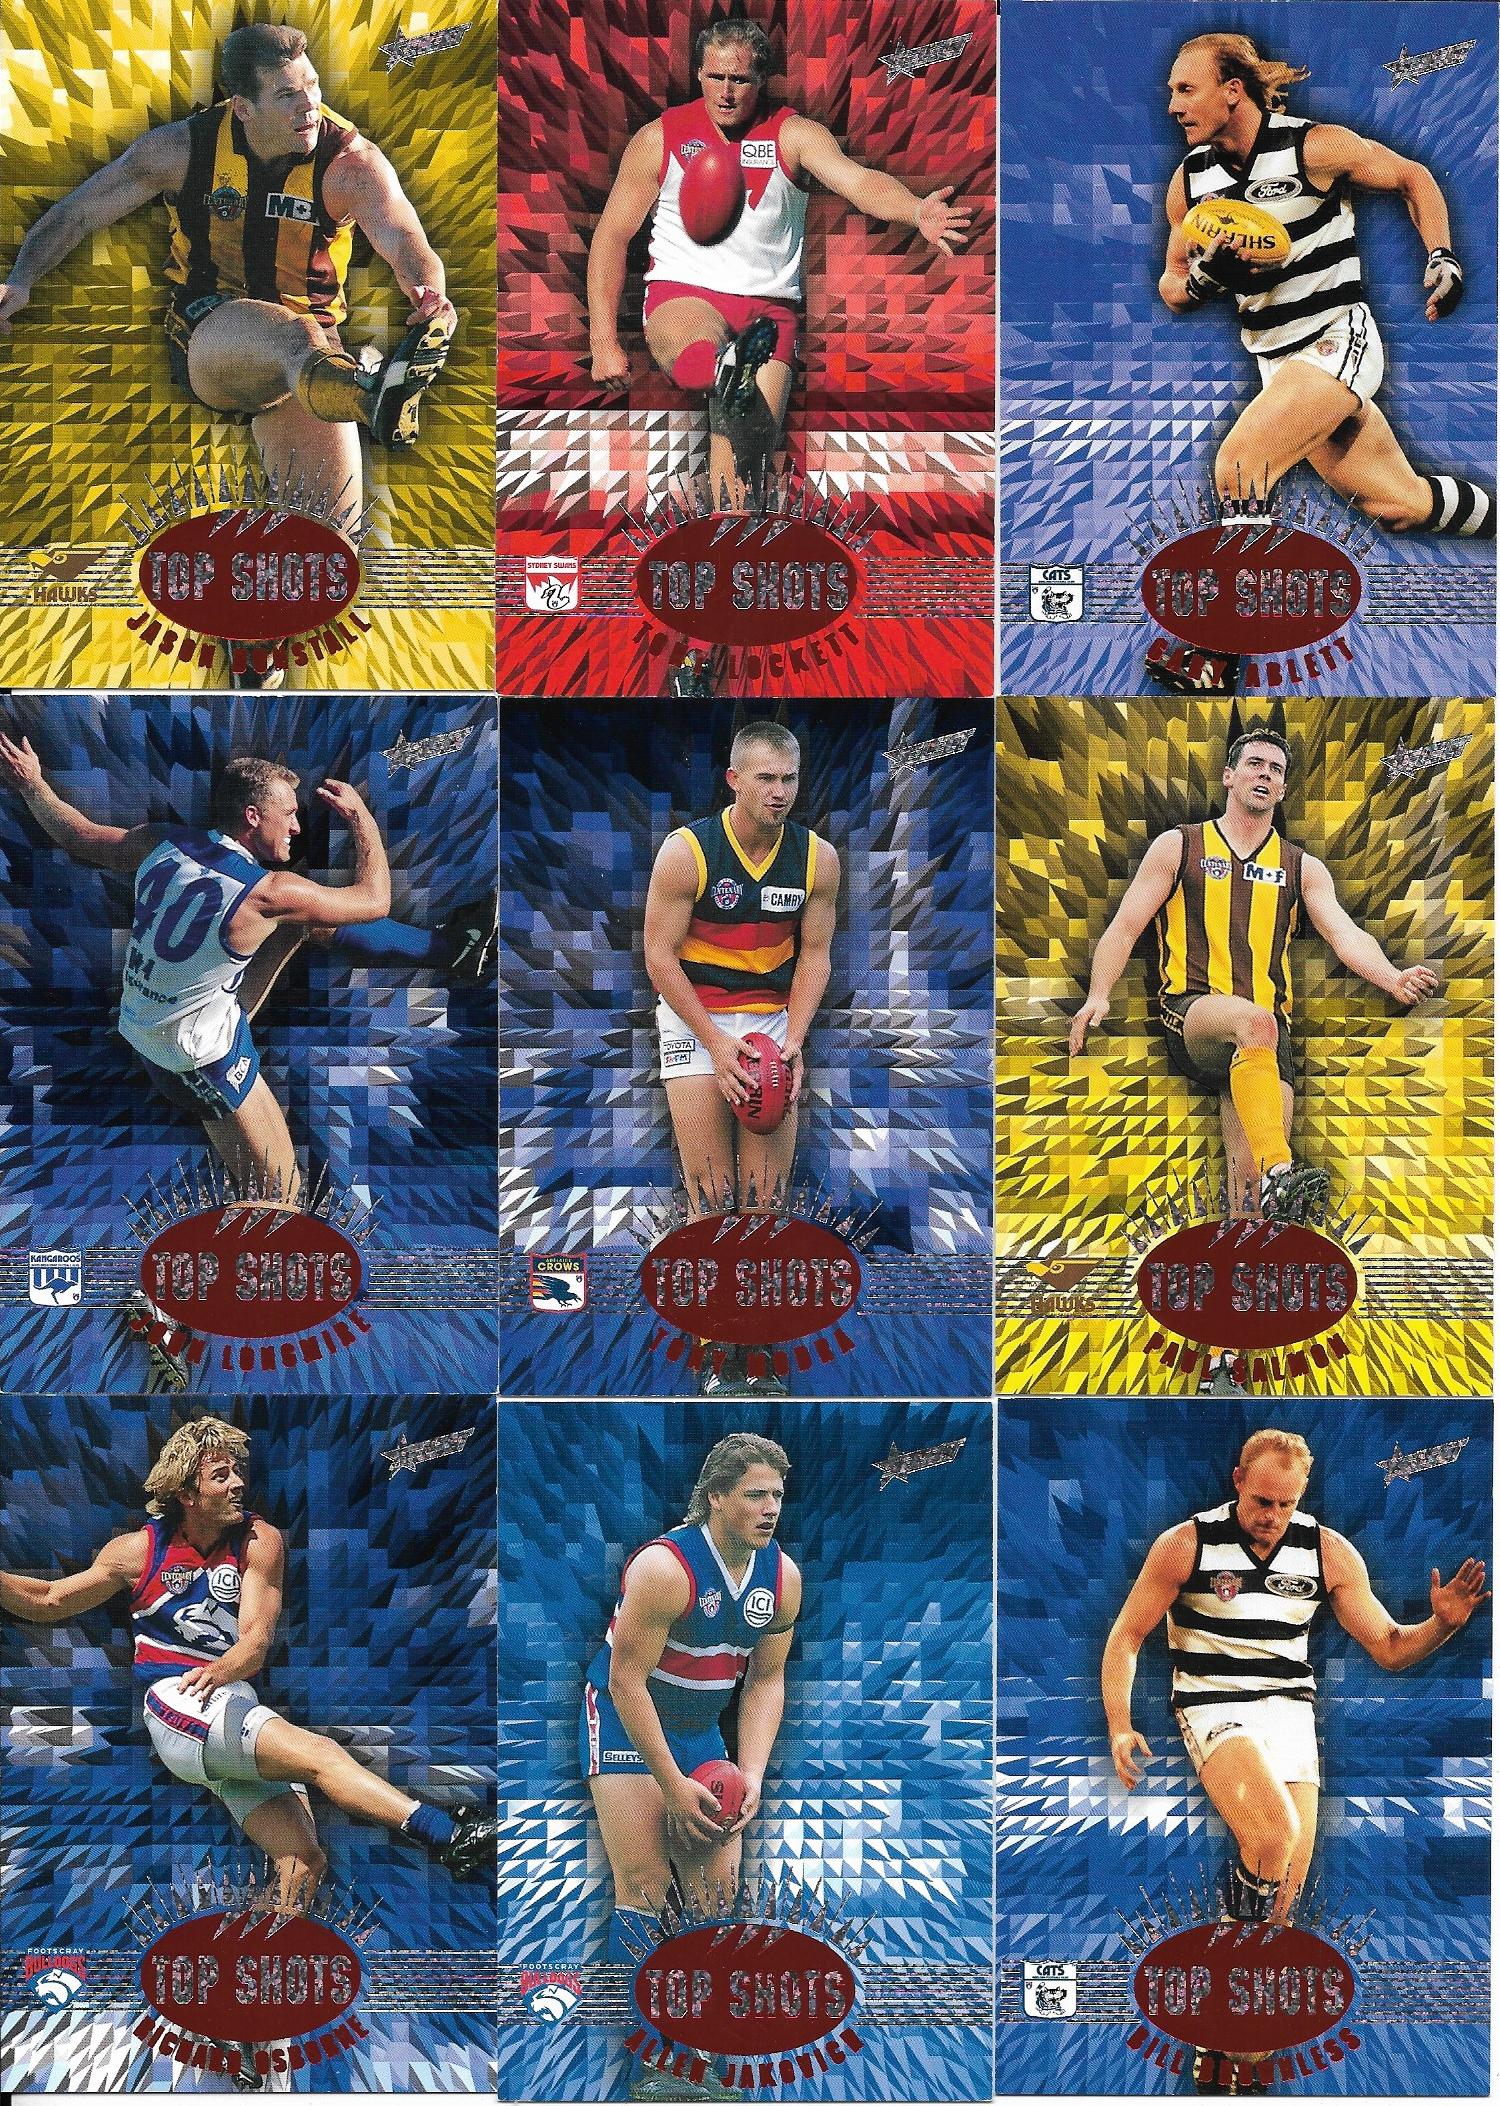 1996 Select Top Shots Full Set (12 Cards)